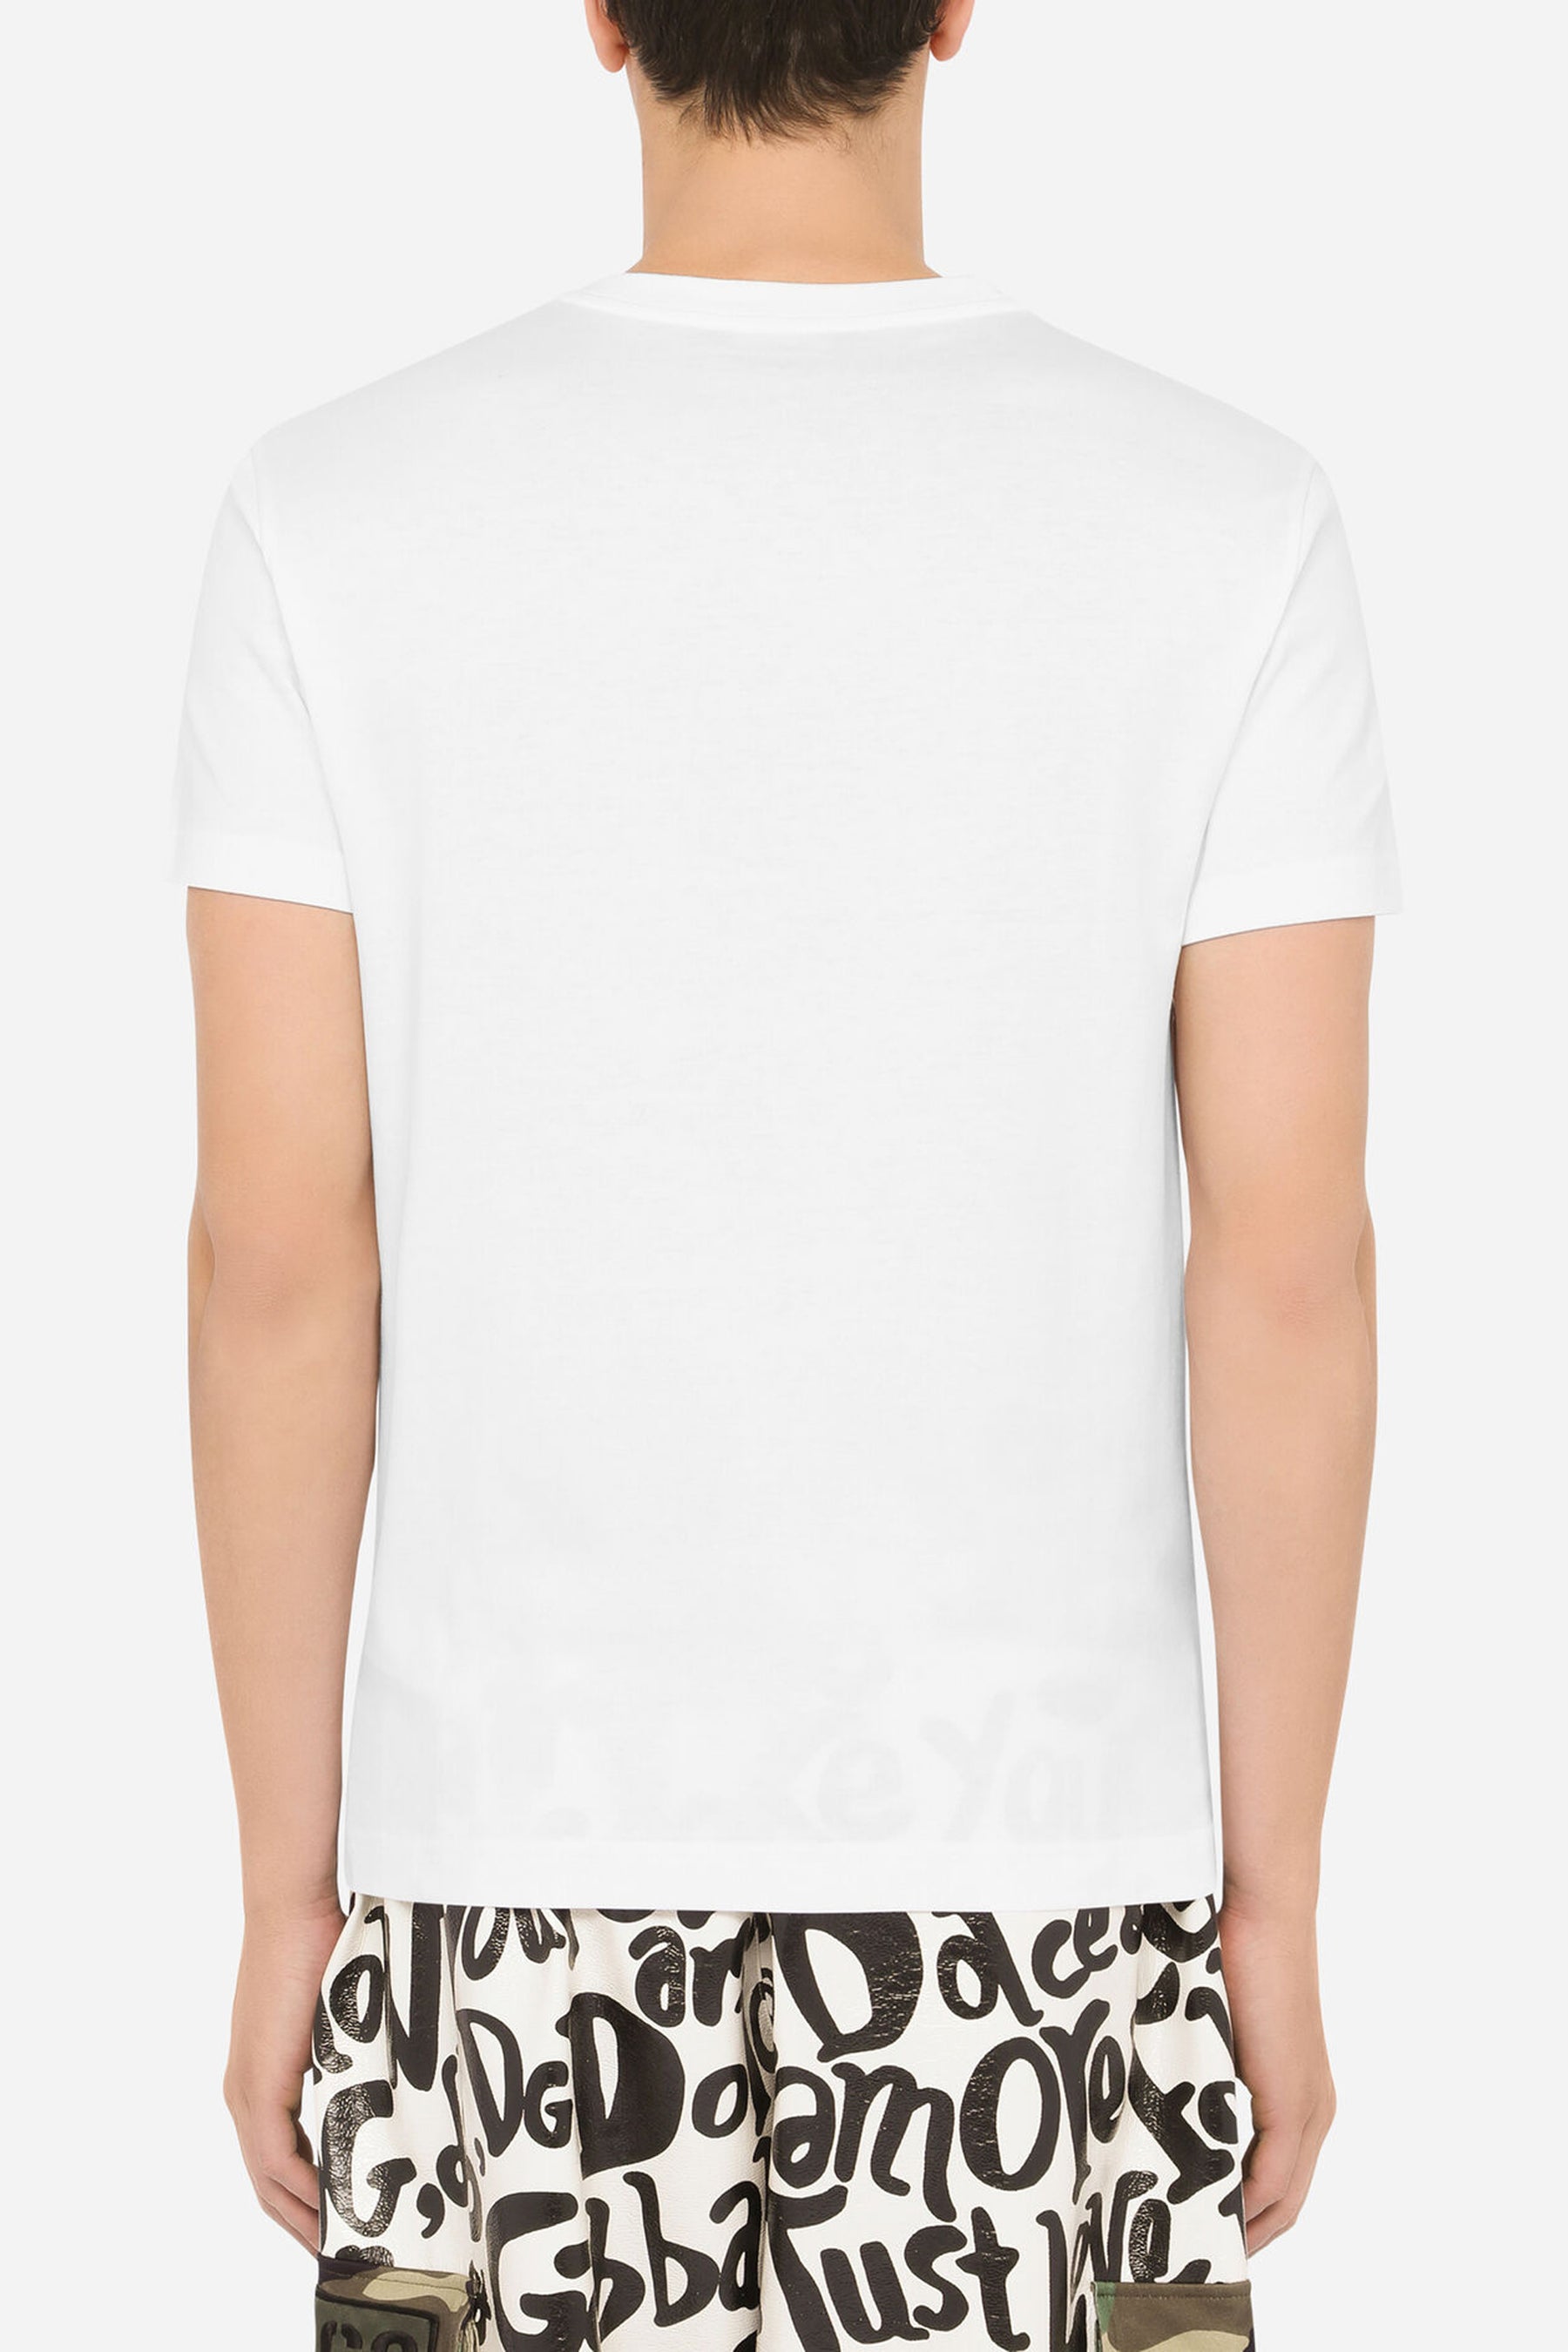 Dolce & Gabbana DG logo print white T-shirt